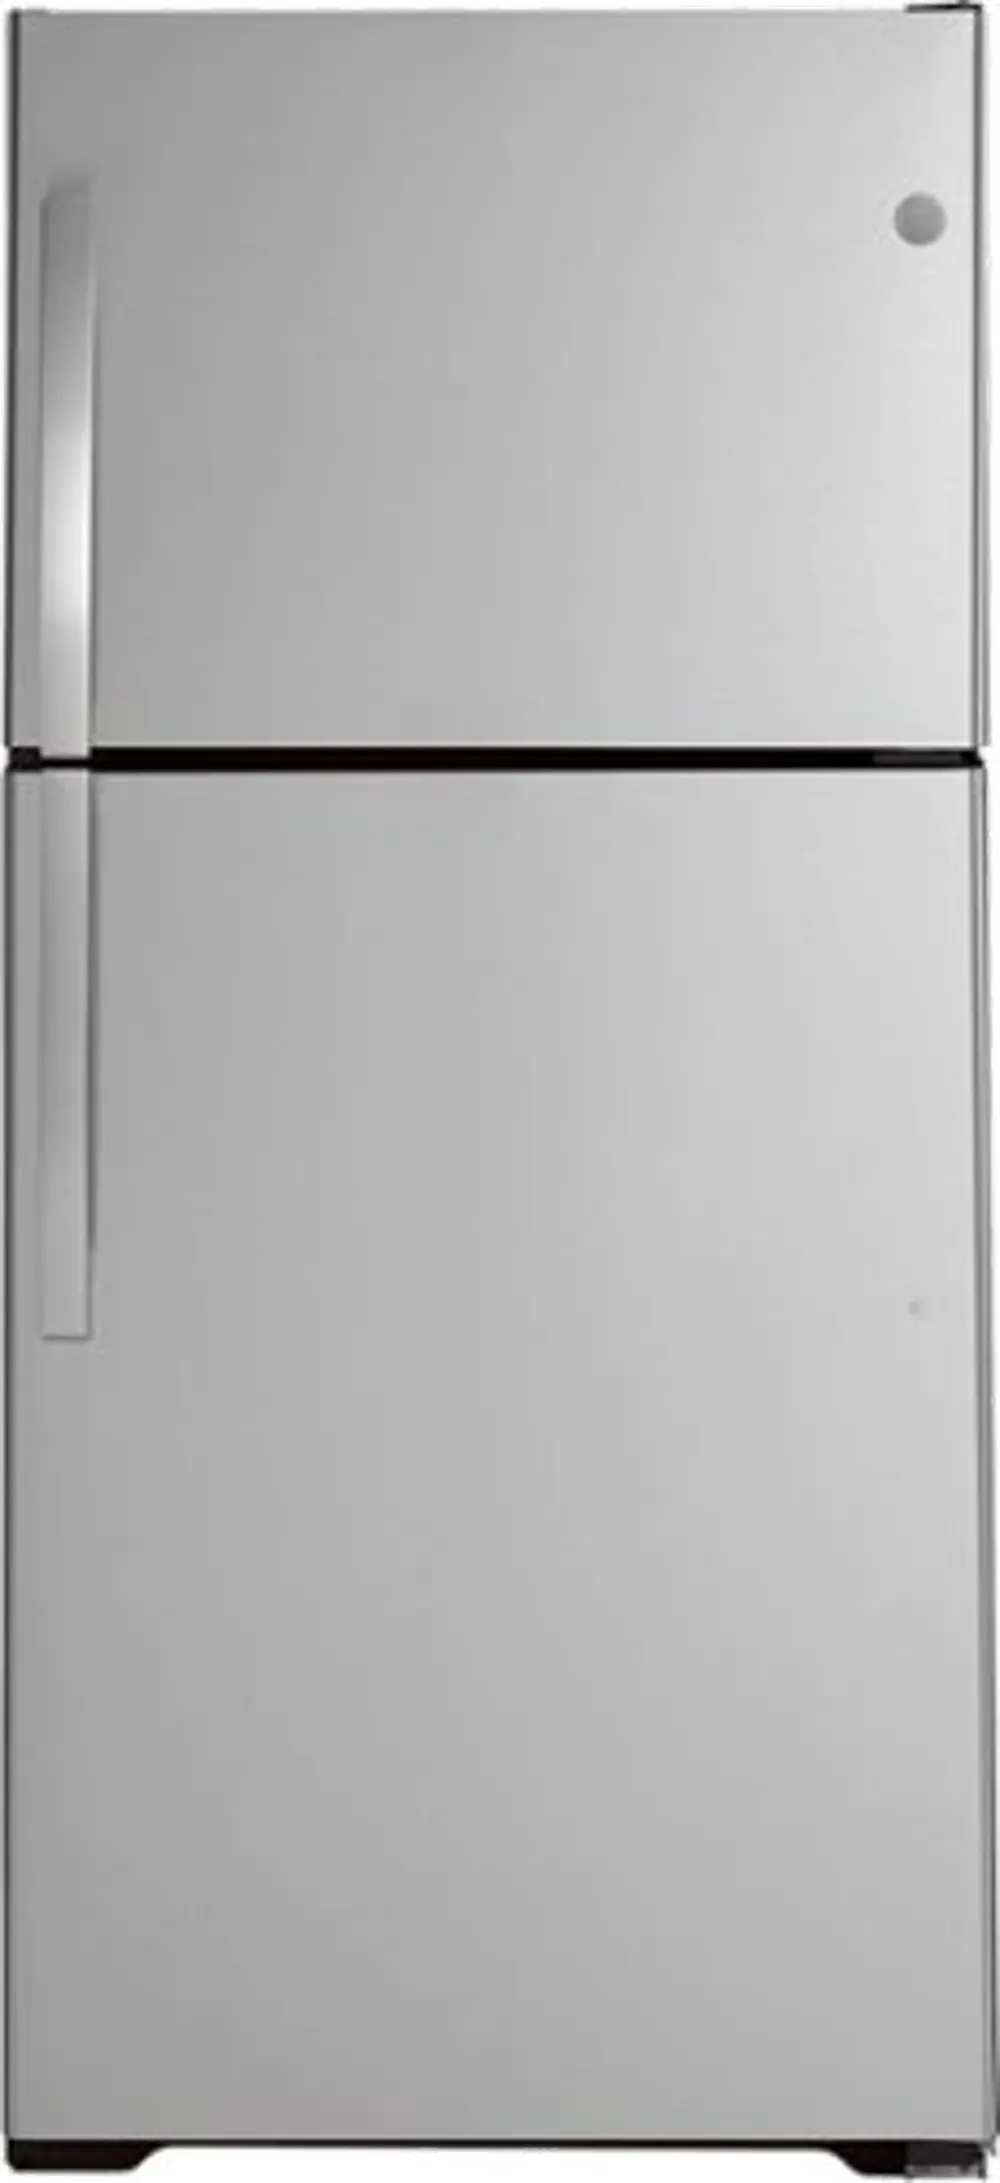 GTS22KYNRFS GE 21.9 cu ft Top Freezer Refrigerator - 33 W Fingerprint Resistant Stainless Steel-1